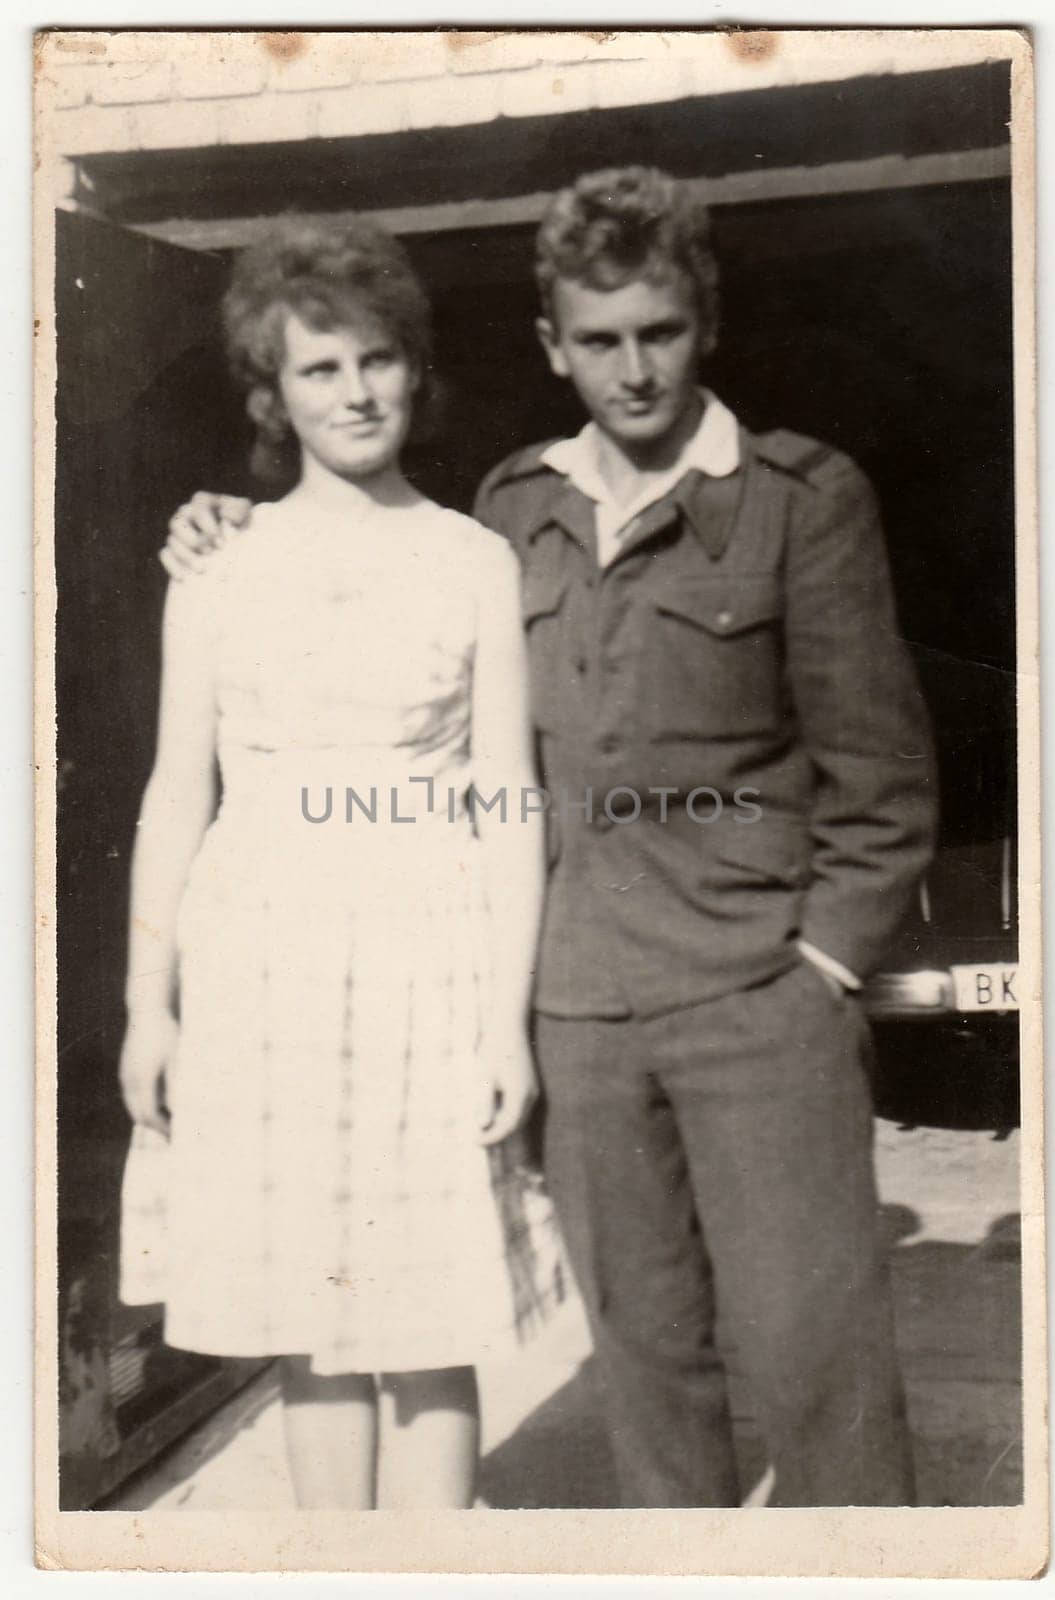 THE CZECHOSLOVAK SOCIALIST REPUBLIC - CIRCA 1950s: An antique Black & White photo shows soldier and his girlfriend.